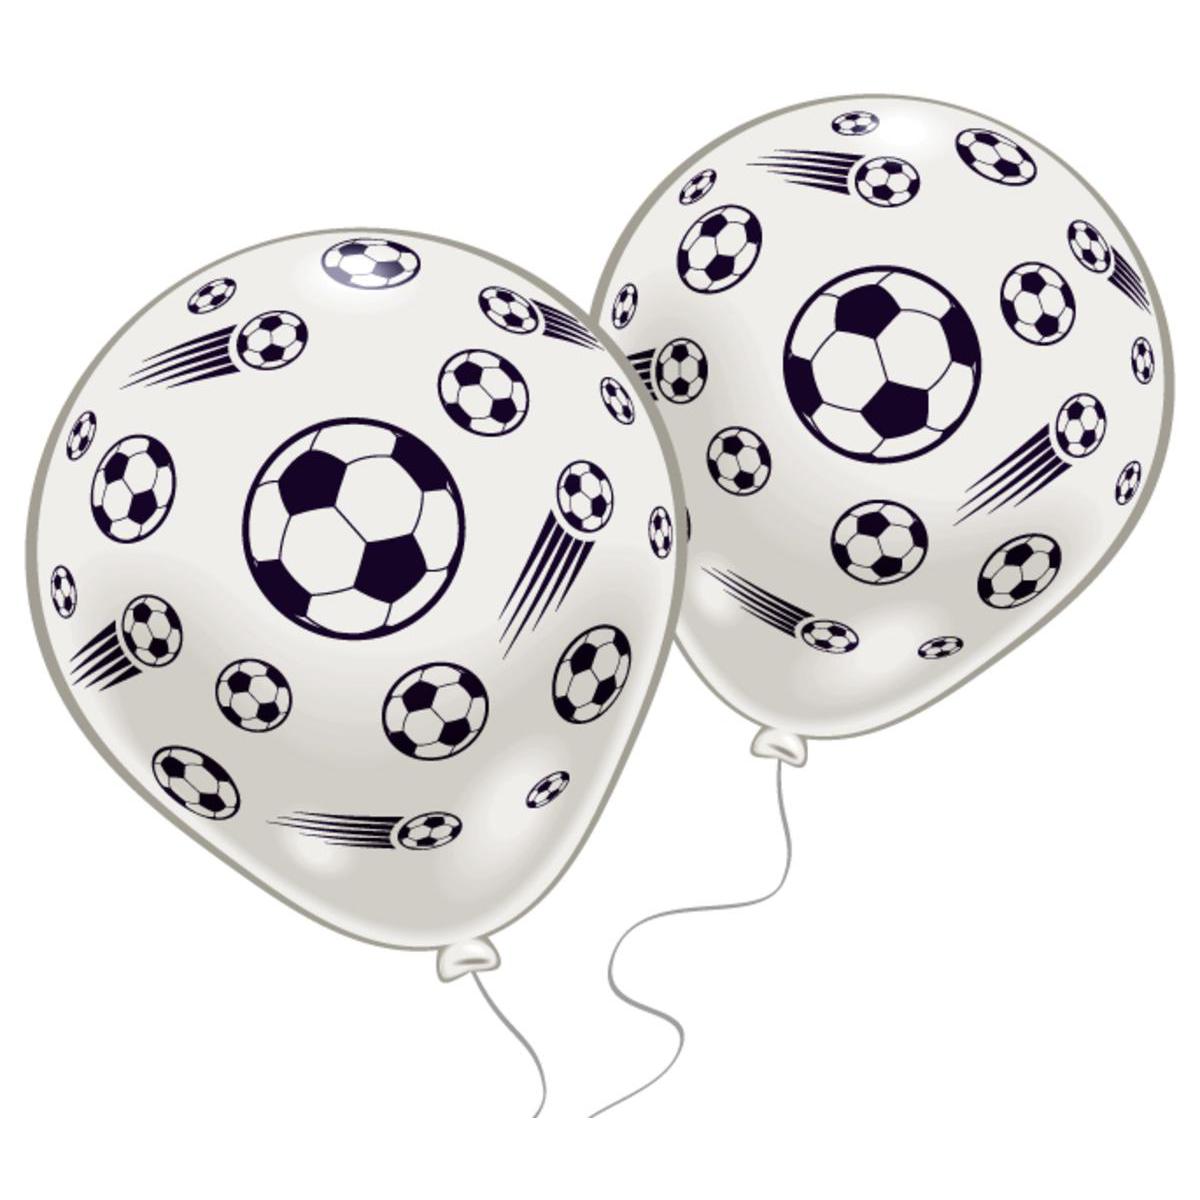 6 ballons décor foot - 25 cm - Noir, blanc